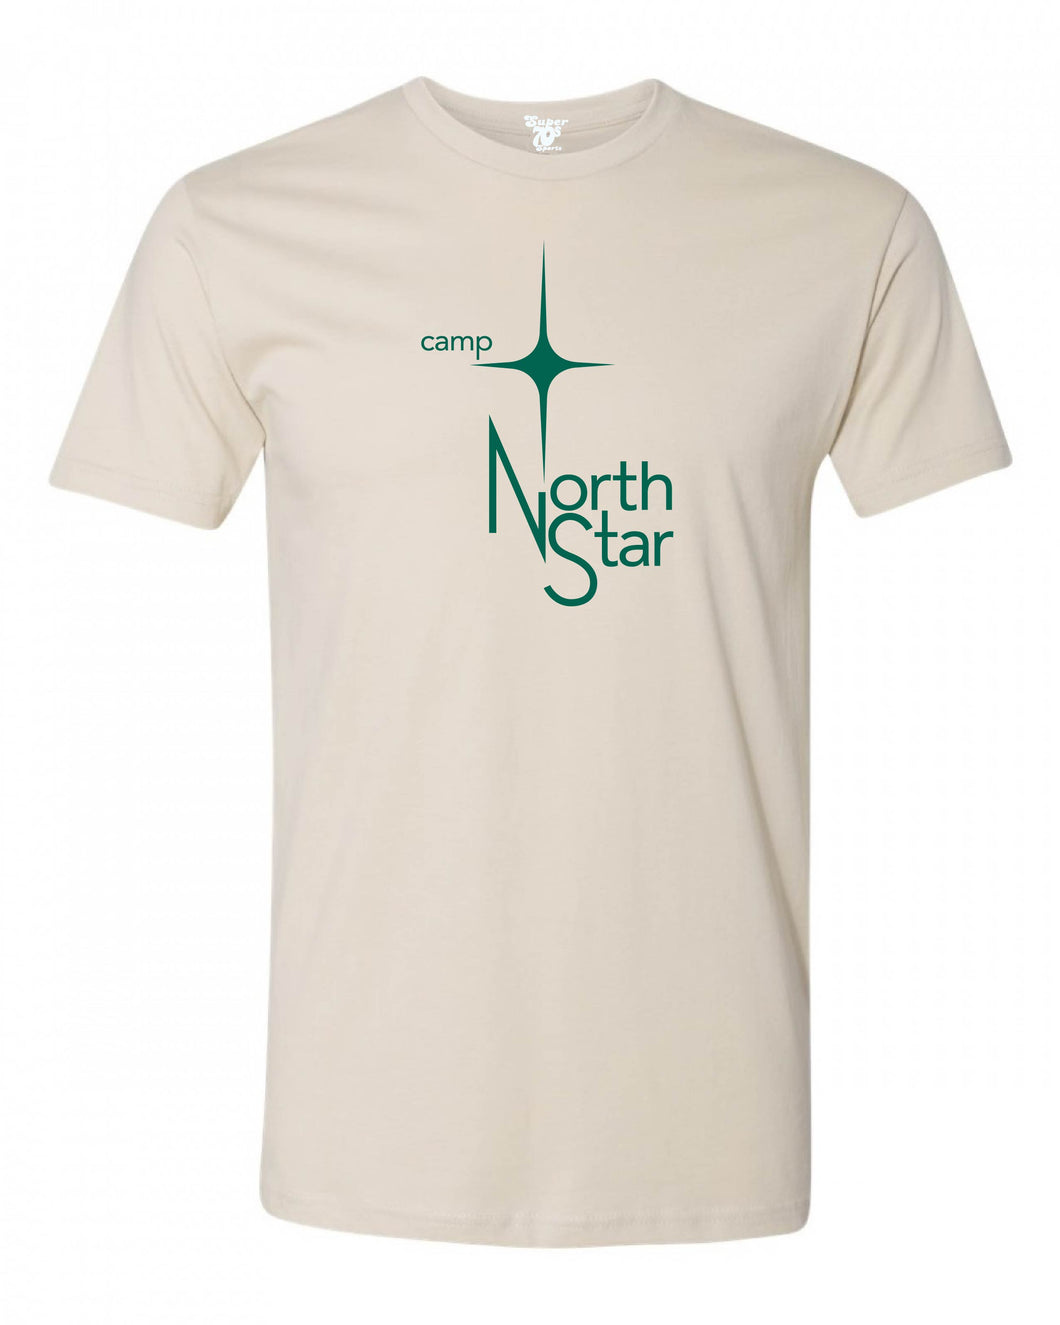 camp north star shirt